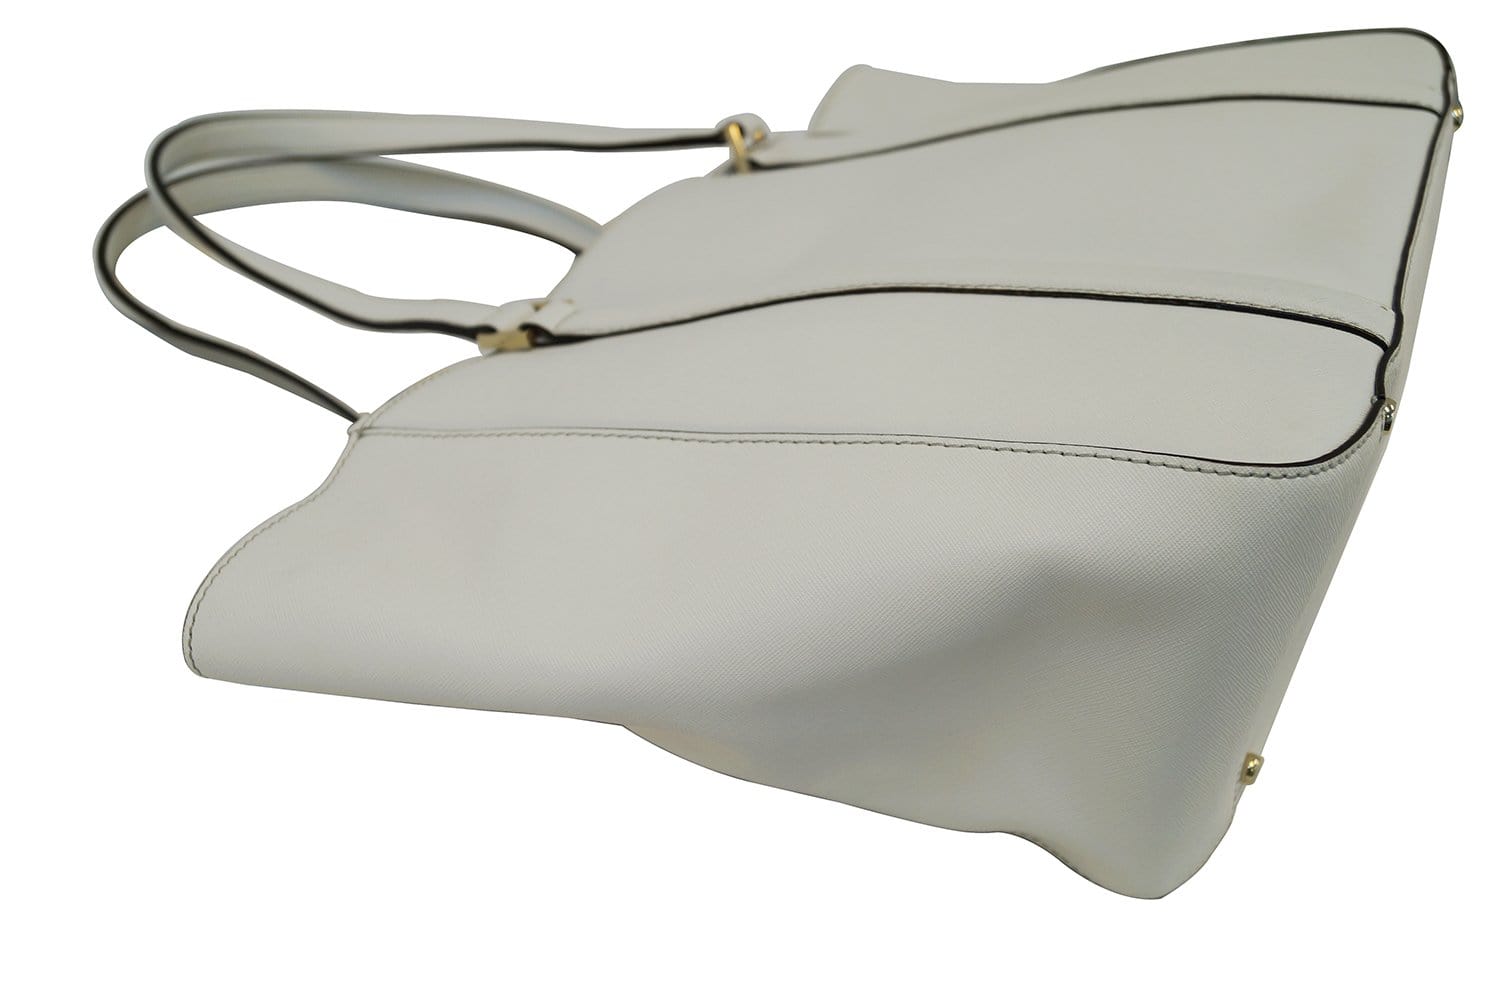 Kate Spade New York Newbury Lane Dally Saffiano Leather Tote Bag White $479